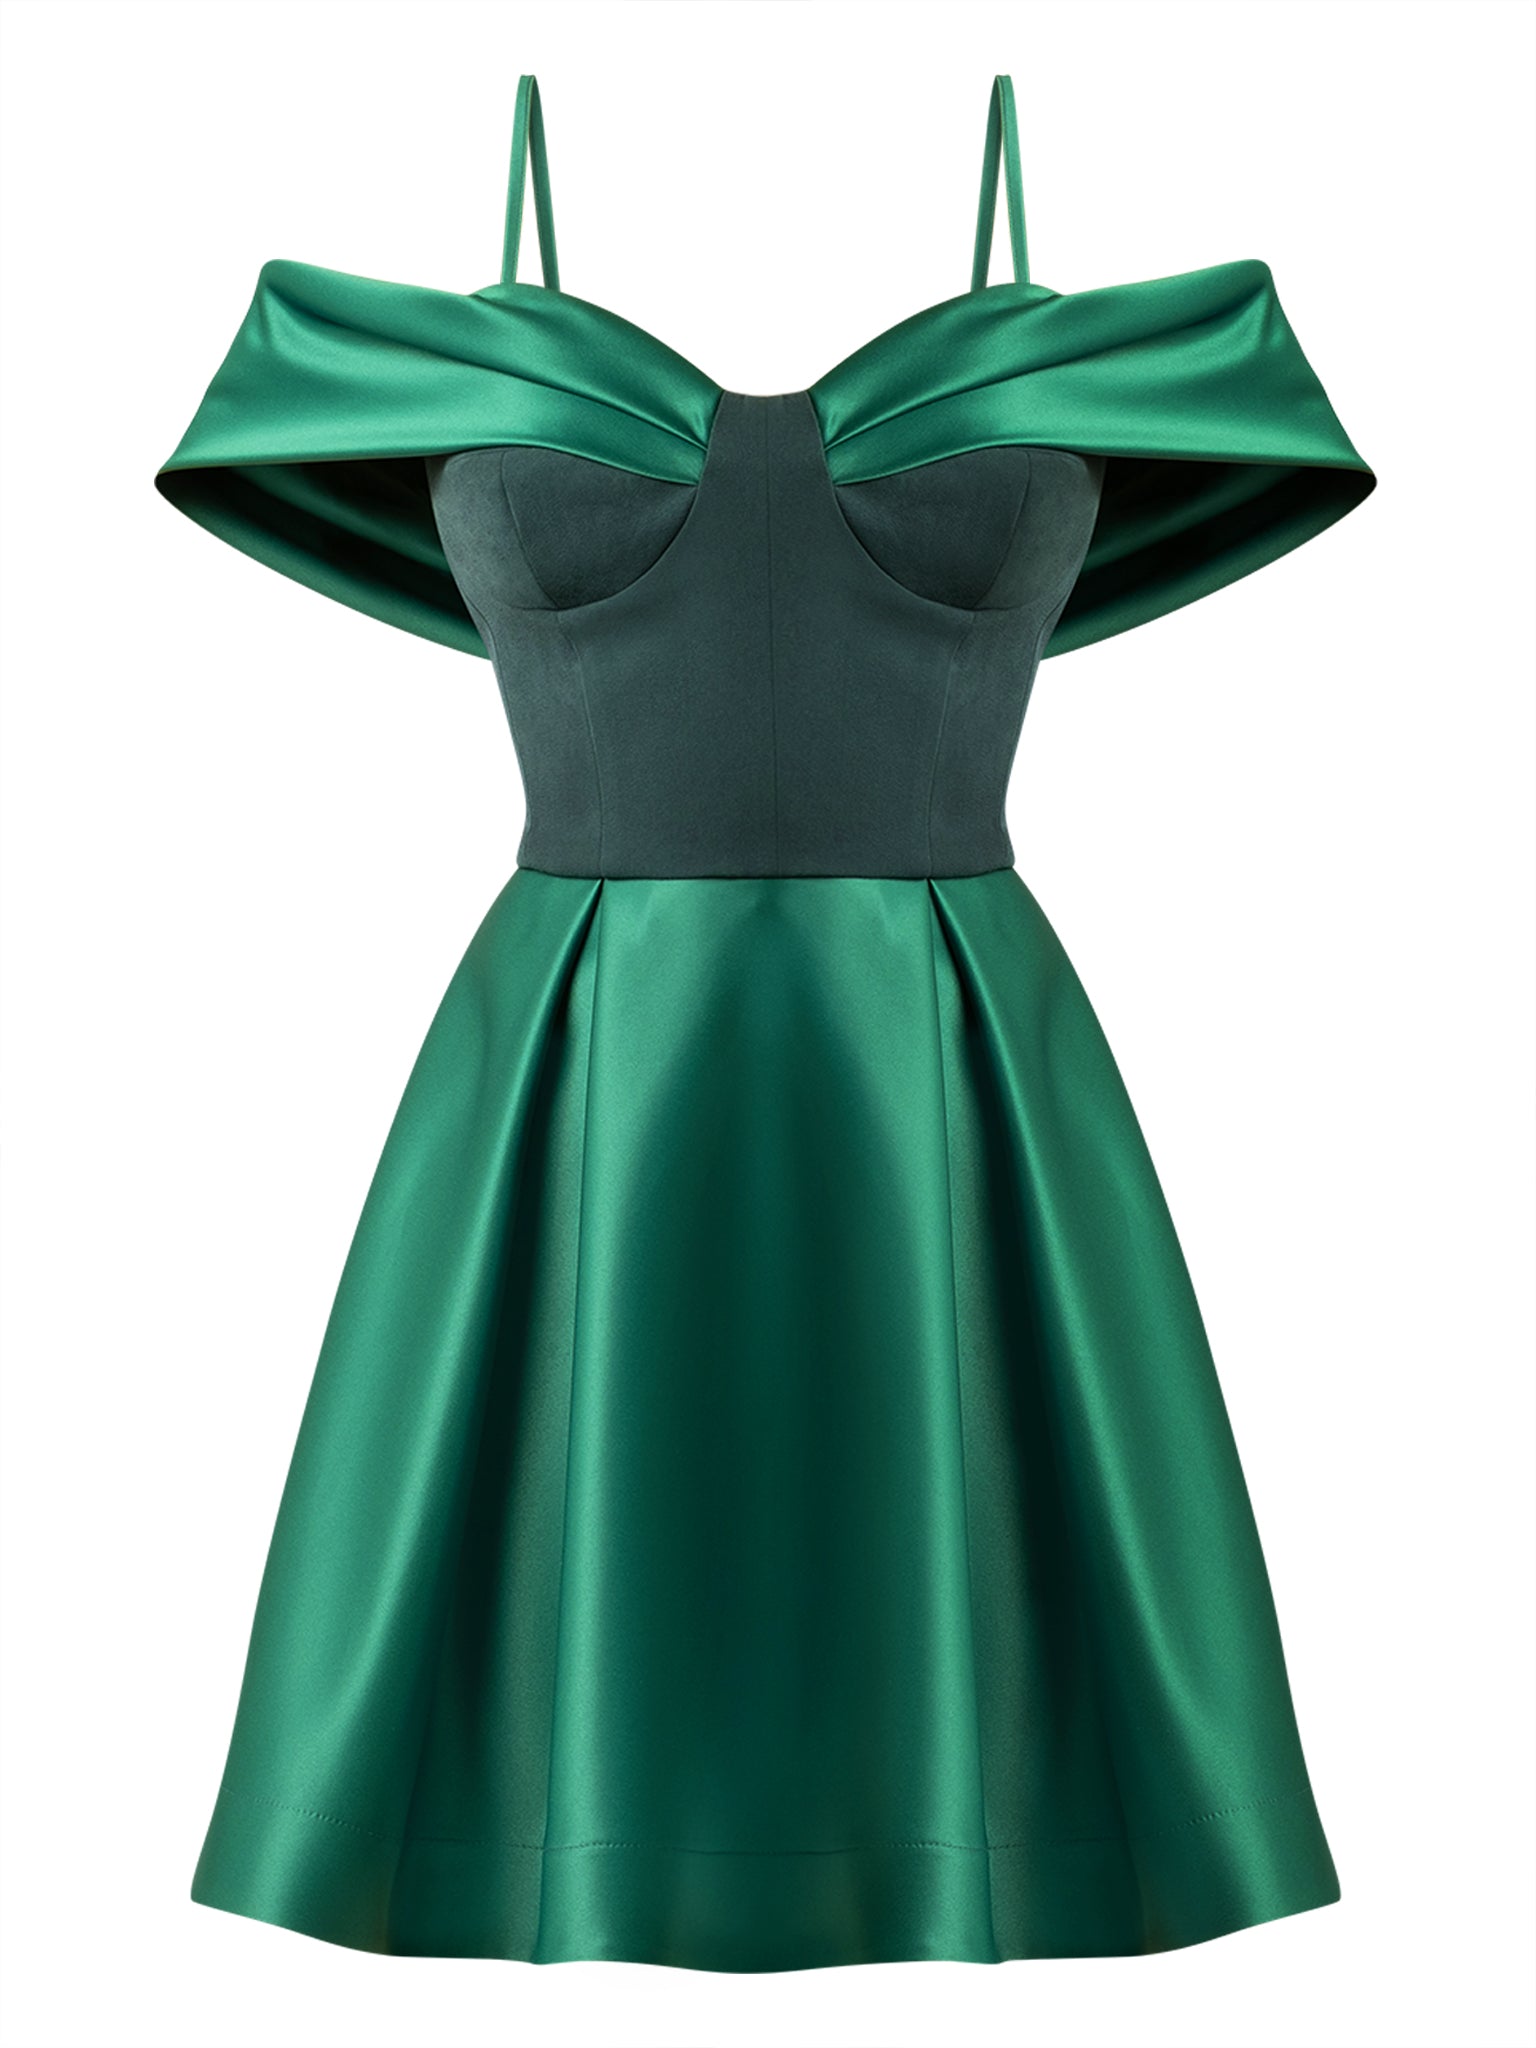 Mystique Flared Satin Mini Dress - Green by Tia Dorraine Women's Luxury Fashion Designer Clothing Brand